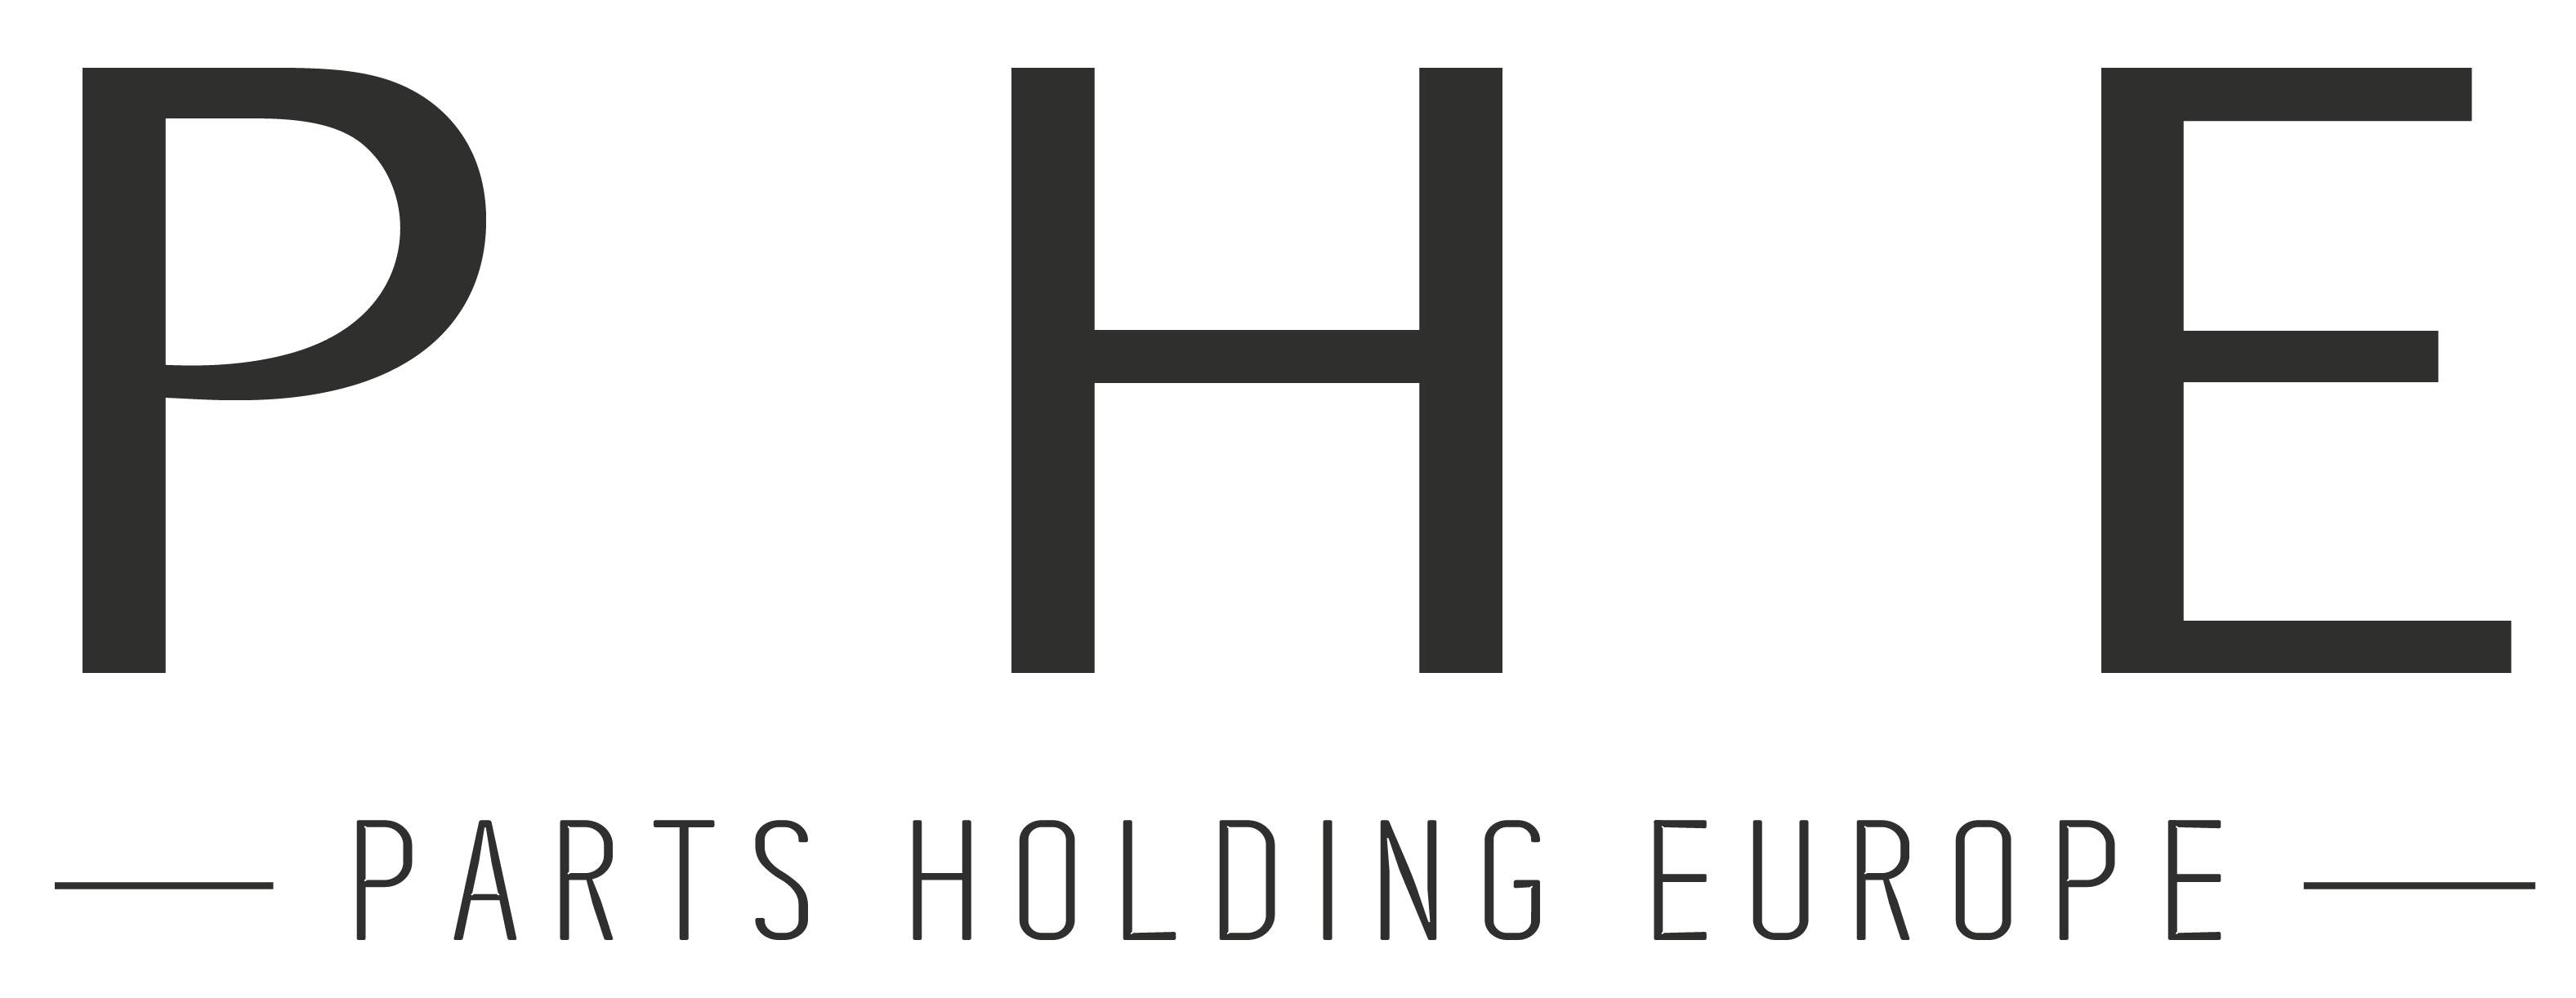 Parts Holding Europe